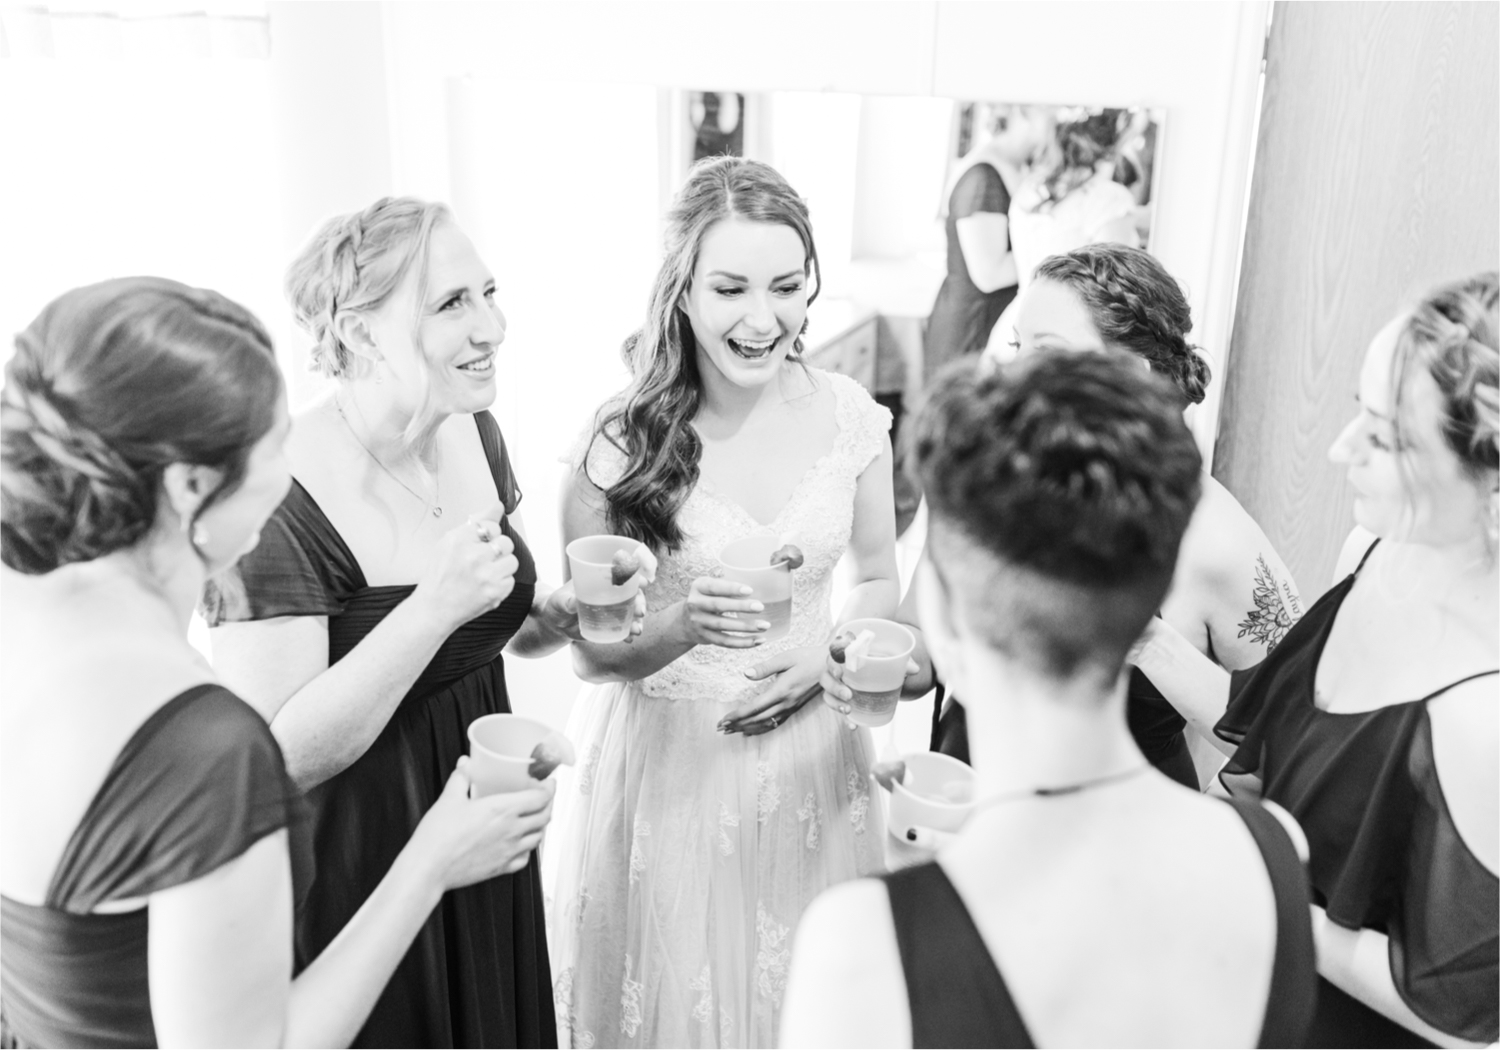 Summer Ellis Ranch Wedding in Loveland Colorado | Britni Girard Photography | Wedding Photo and Video Team | Bride hair Dondi AtWow from Sola Salon in Loveland | Bridesmaids Toast